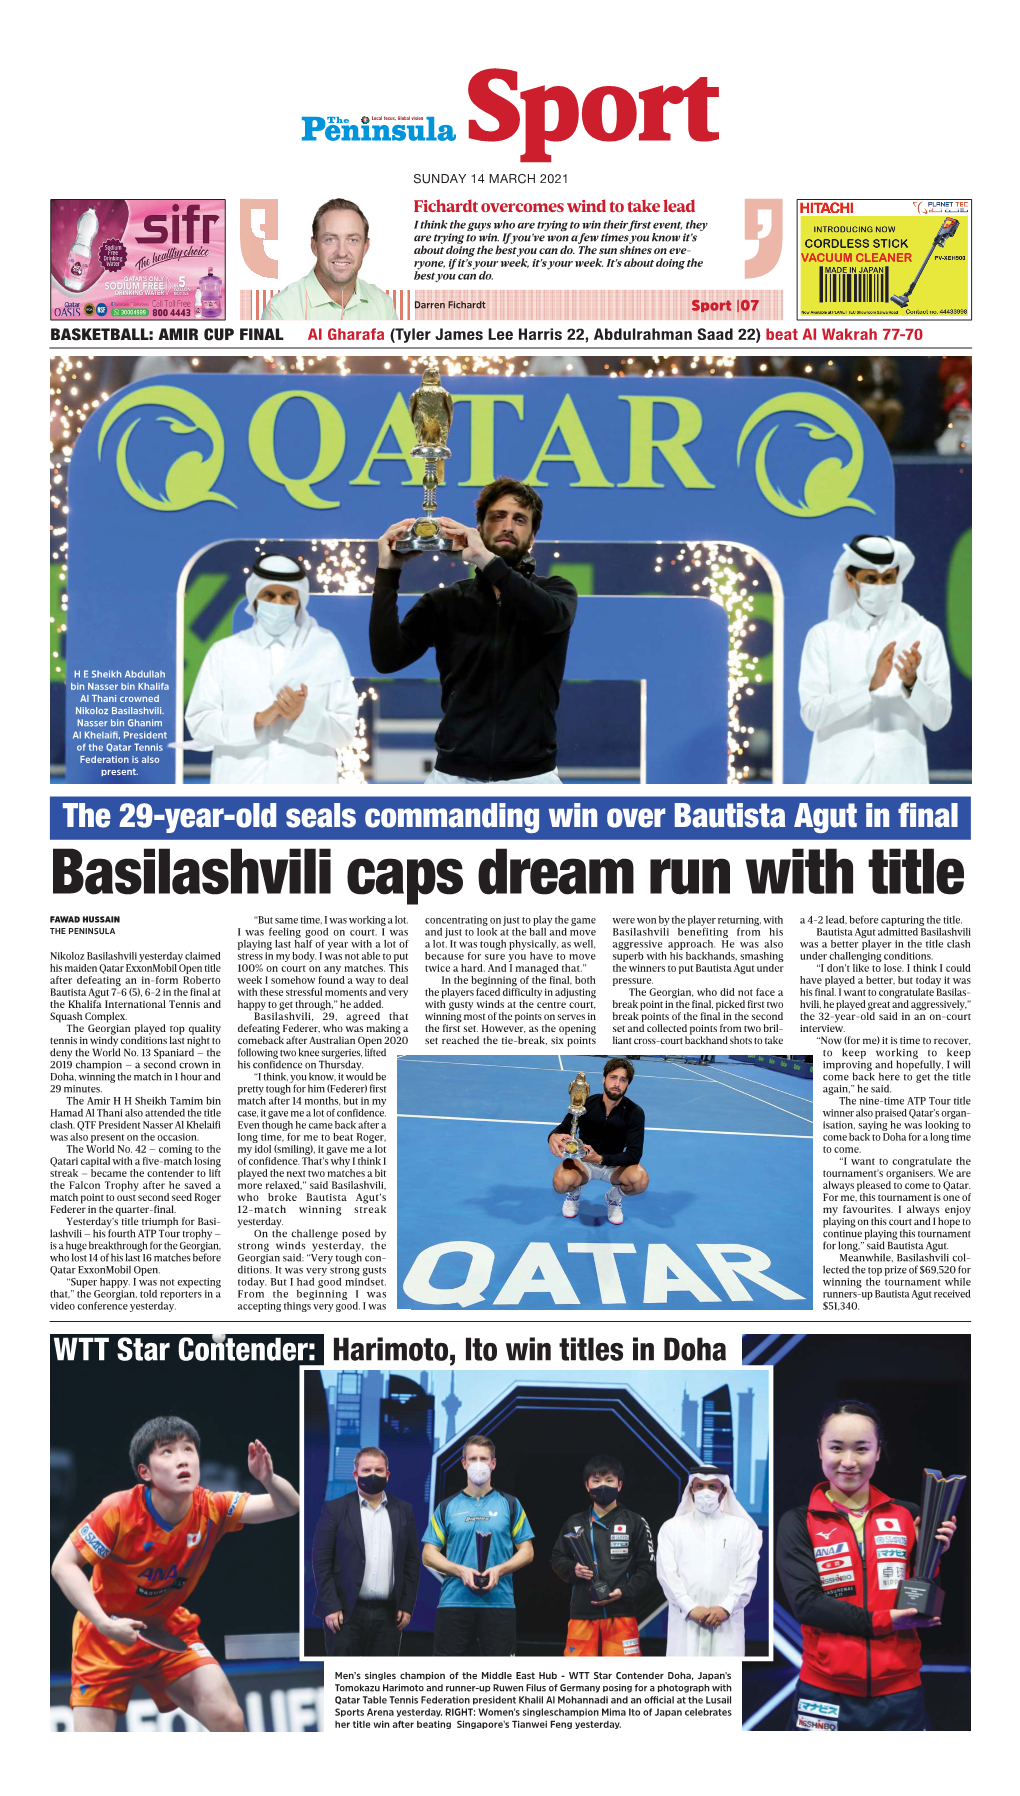 Basilashvili Caps Dream Run with Title